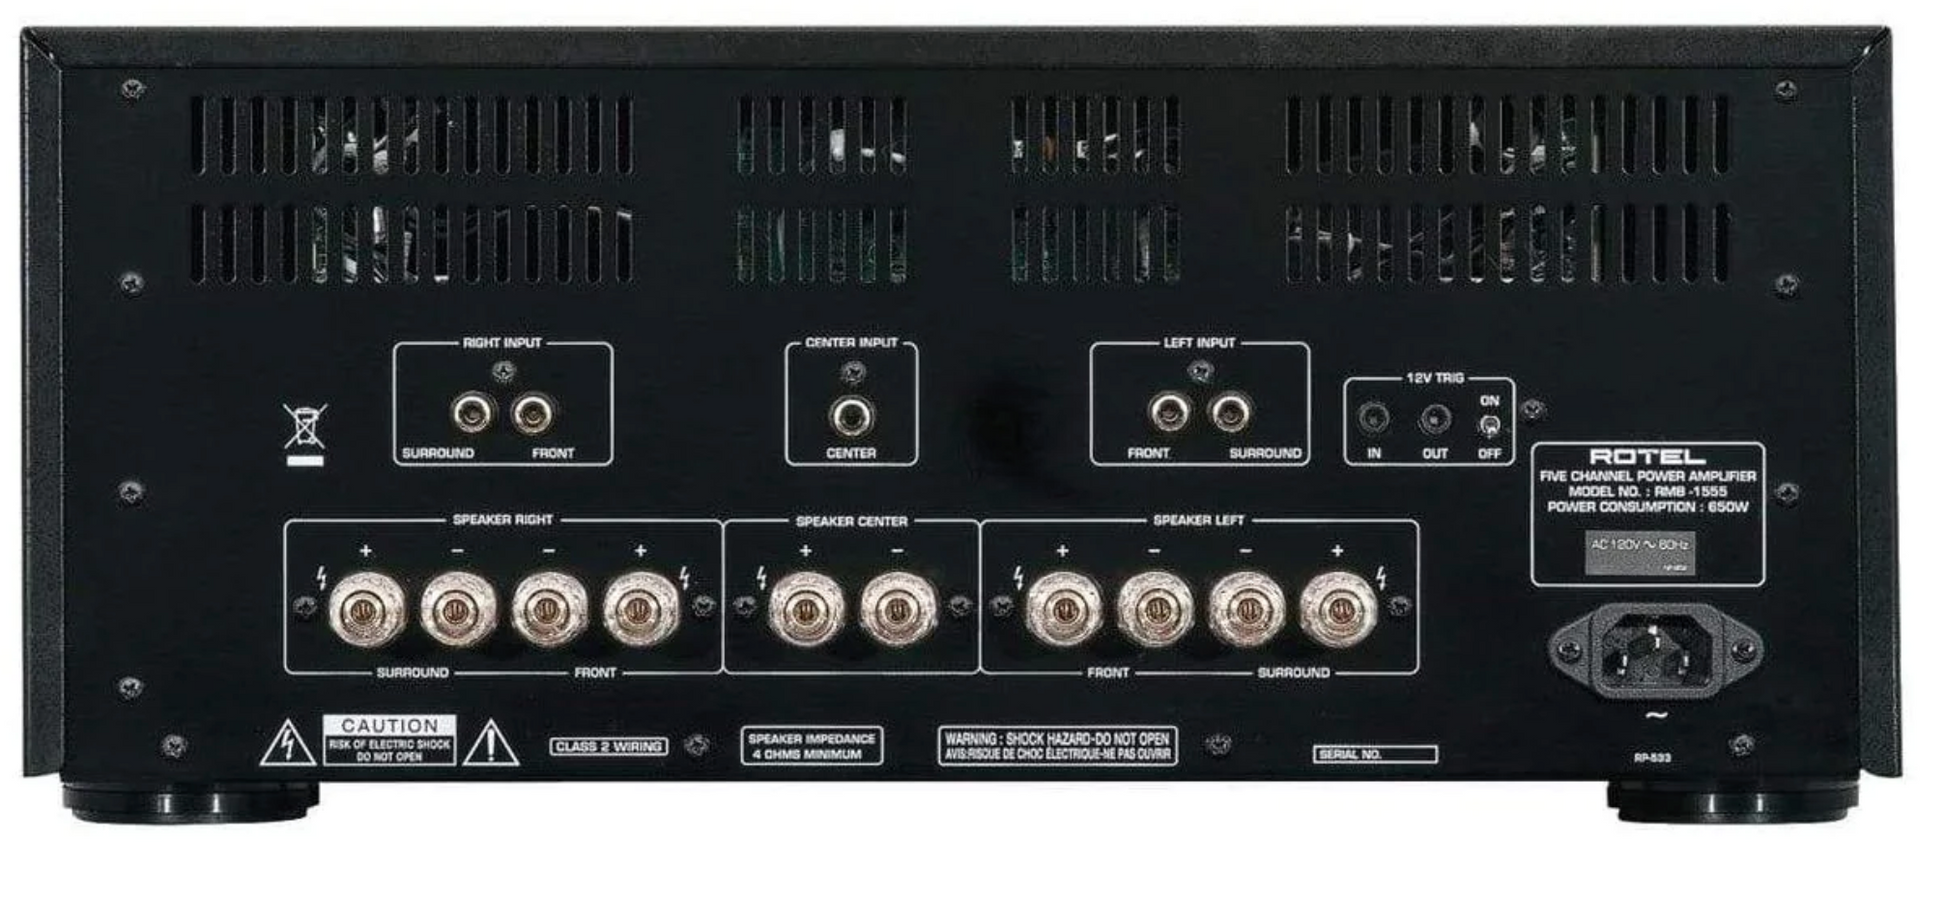 Rotel RMB-1555 Multichannel Surround Power Amplifier, rear black panel